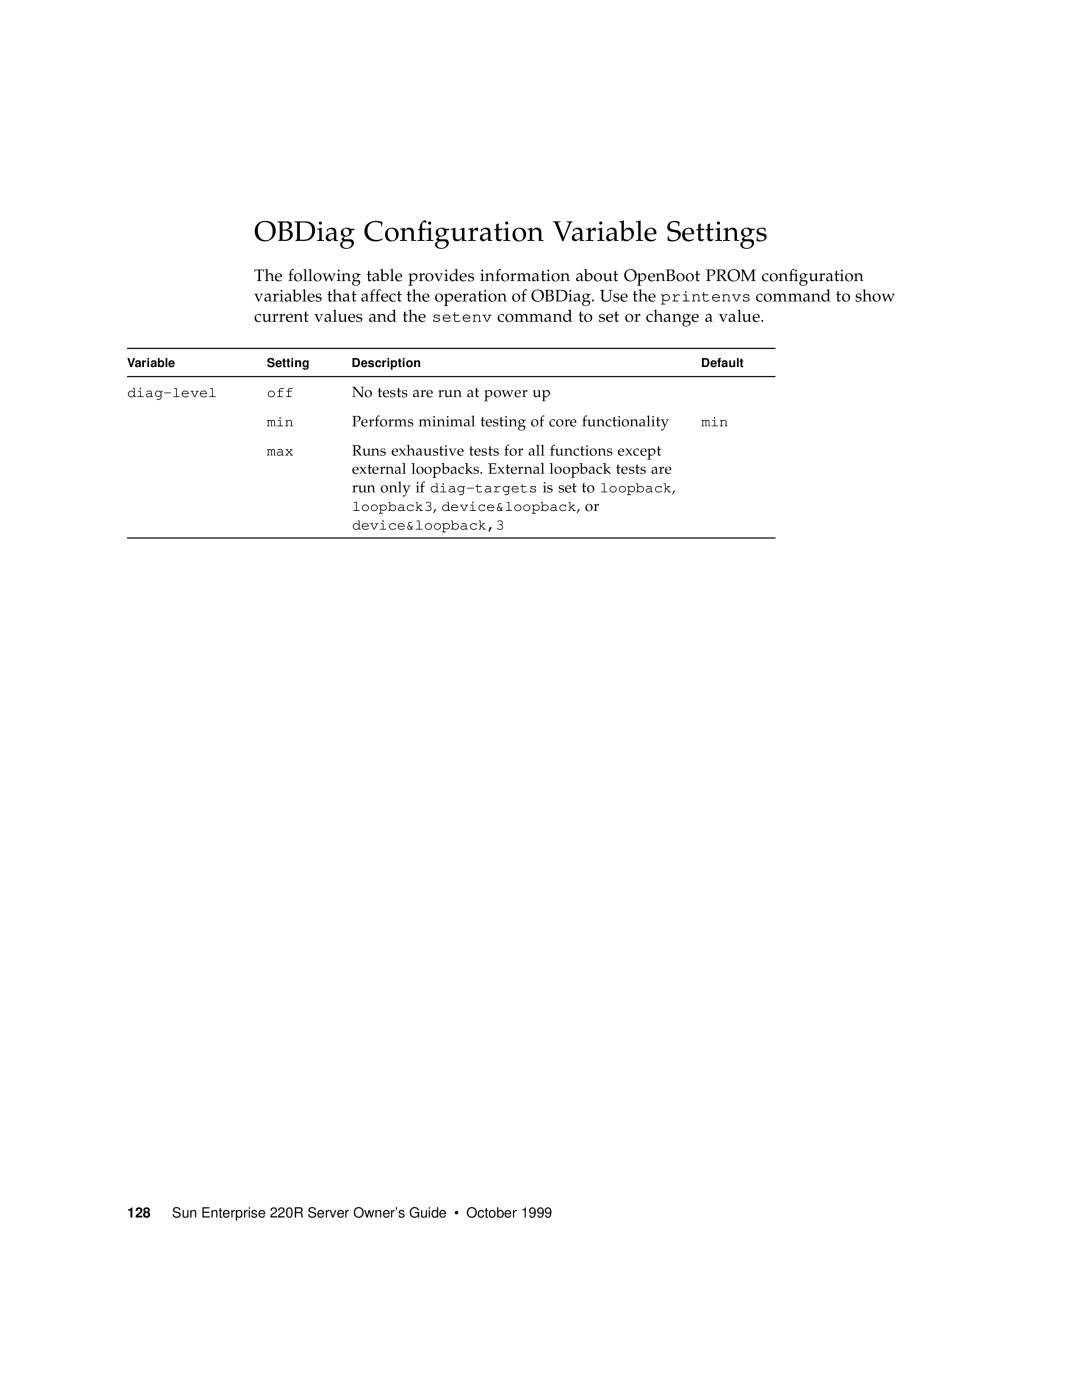 Sun Microsystems 220R manual OBDiag Configuration Variable Settings 